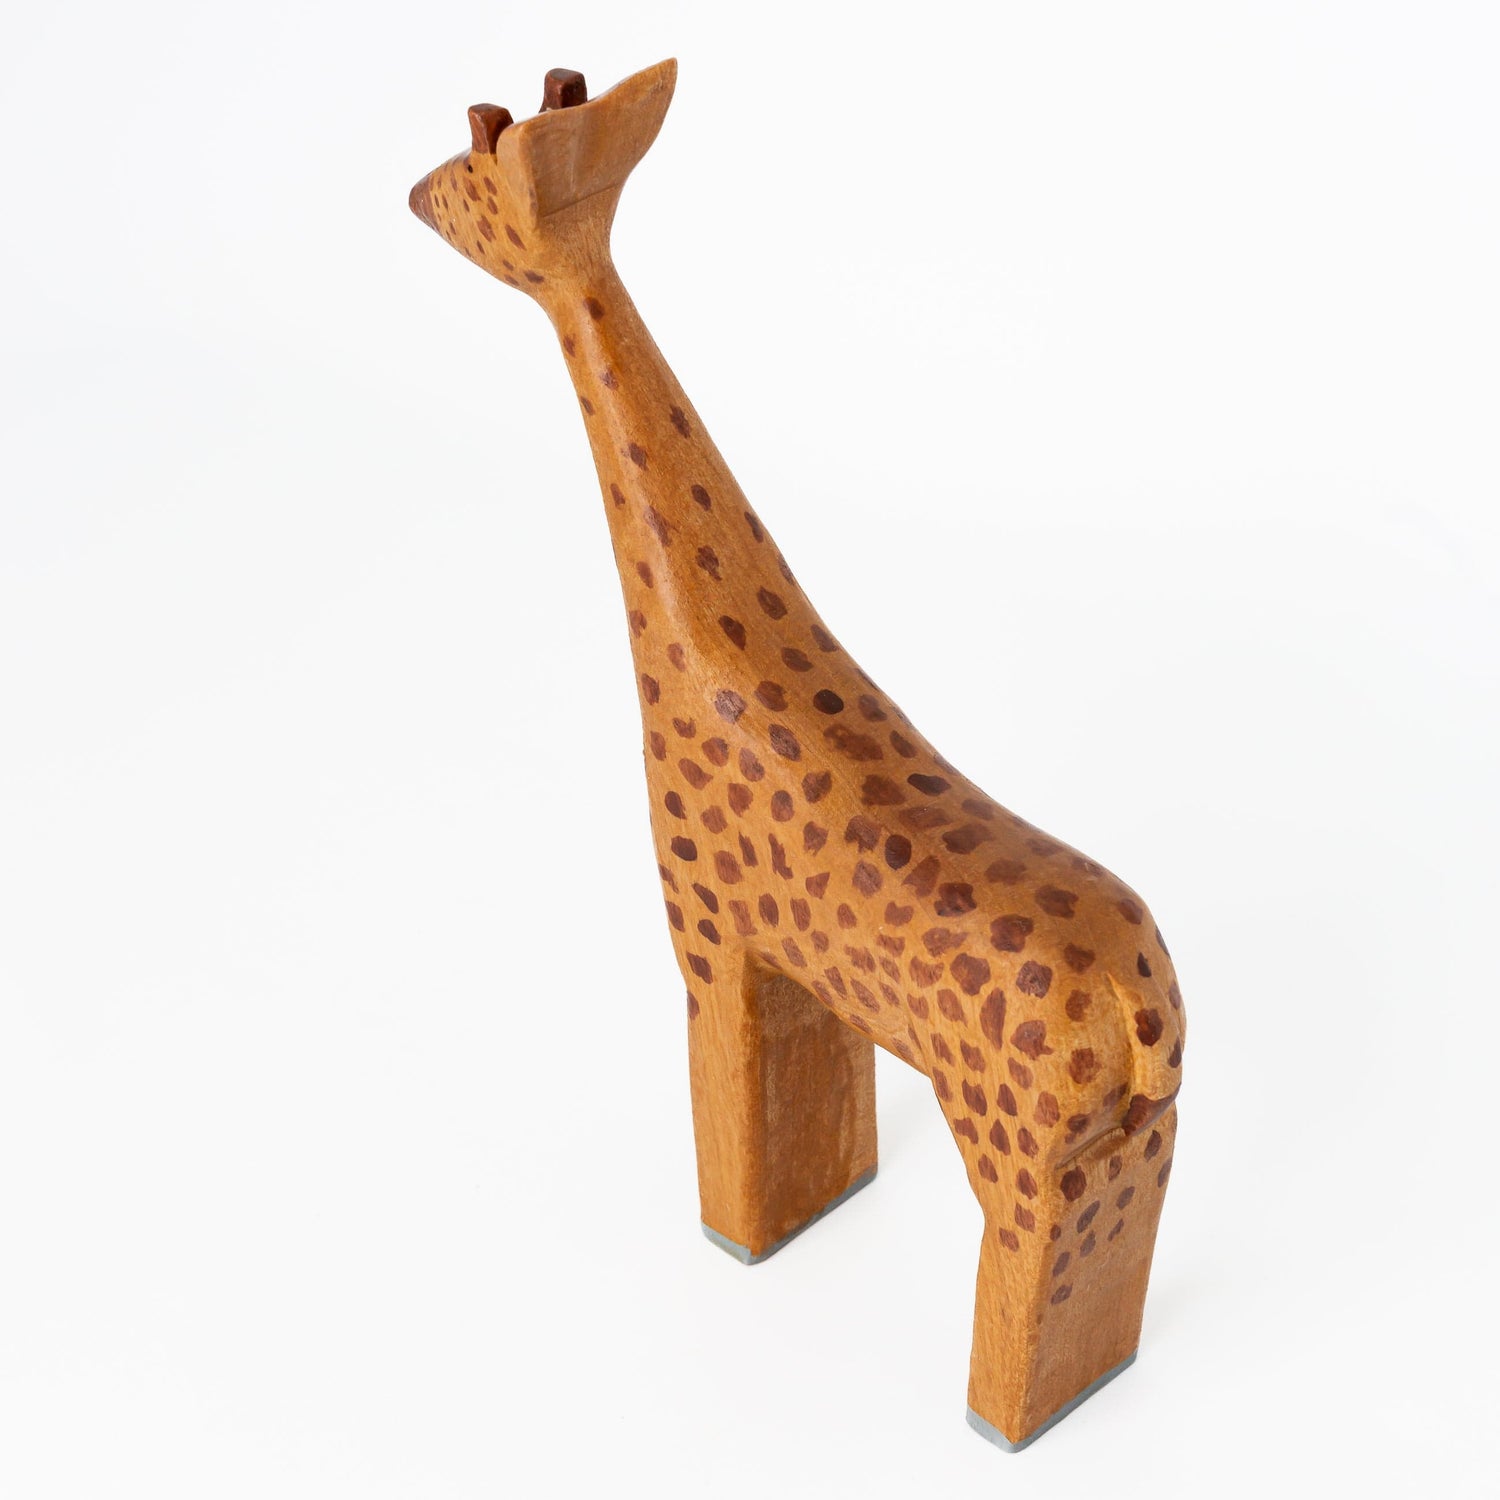 Bumbleberry Toys Wooden Animals "Georgia Giraffe" Wooden Animal Toy (Handmade in Canada)